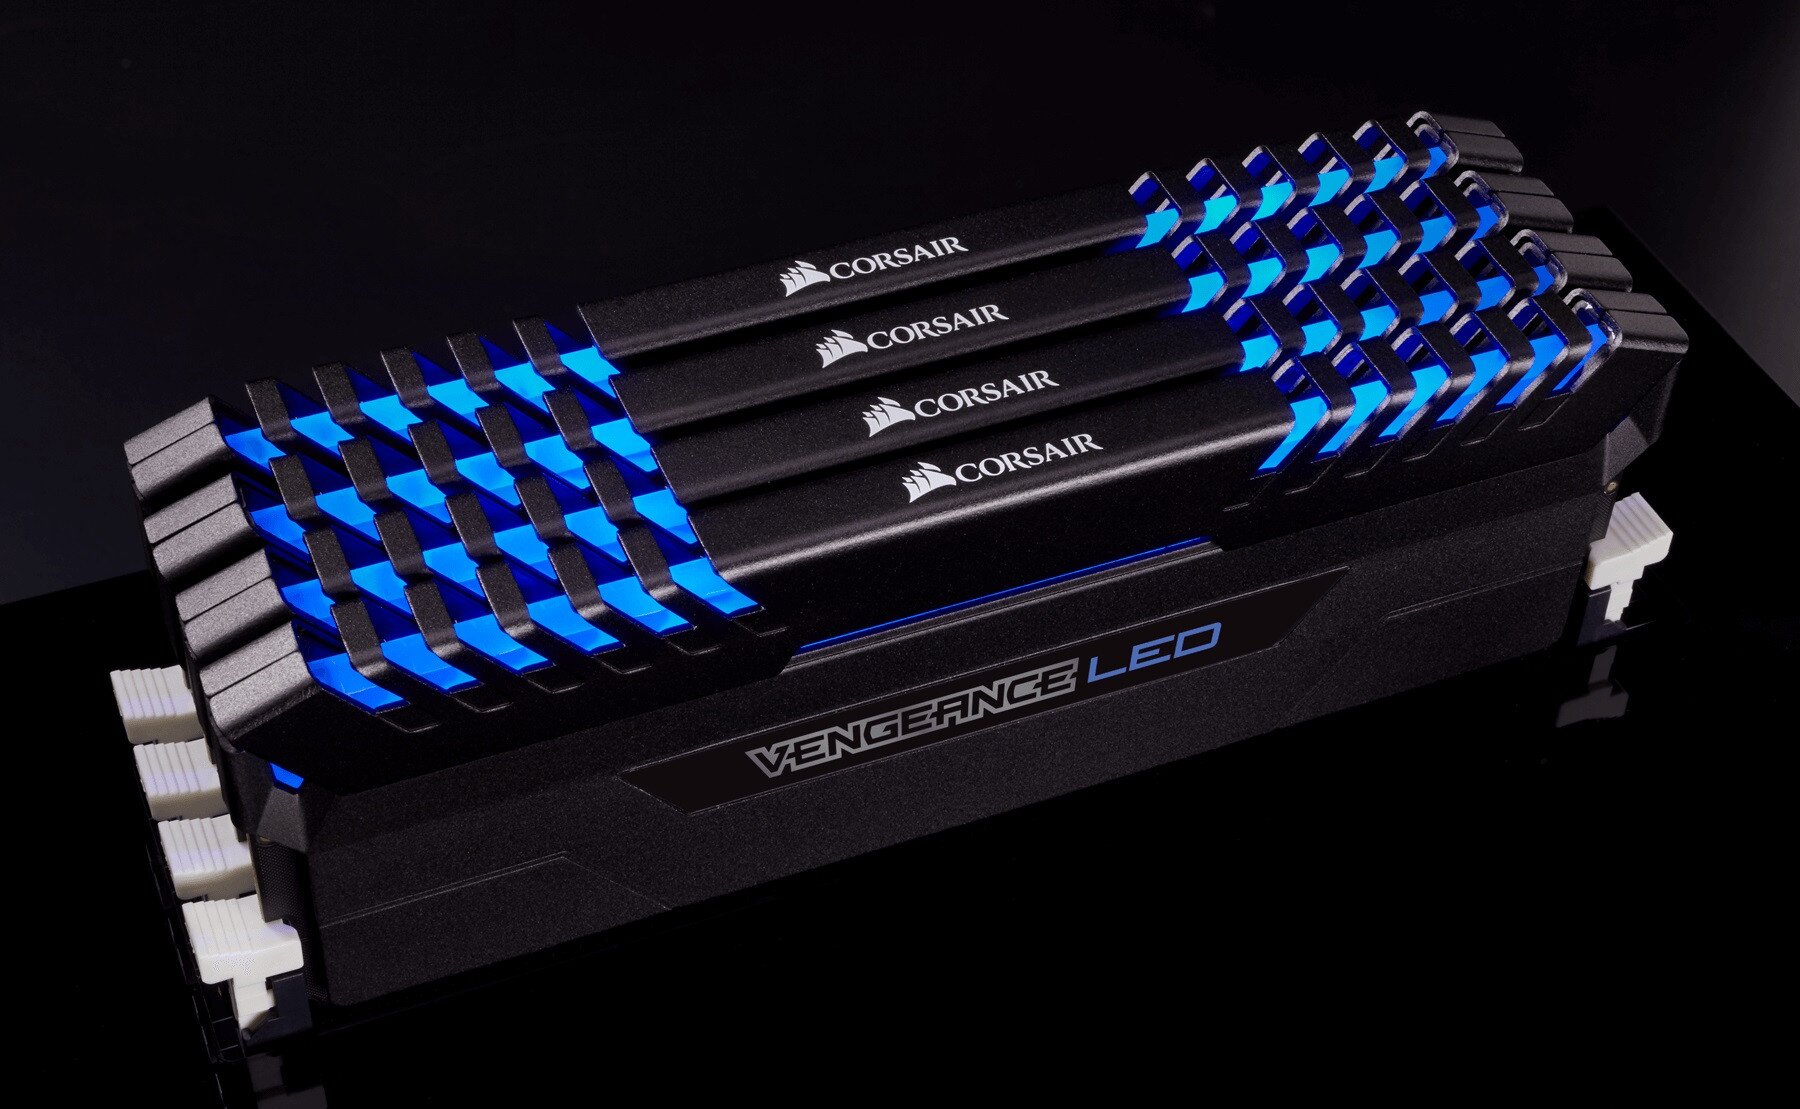 Corsair Vengeance LED - 32GB (4 x 8GB) DDR4 DRAM - 2666MHz C16 Memory Kit -  Blue LED